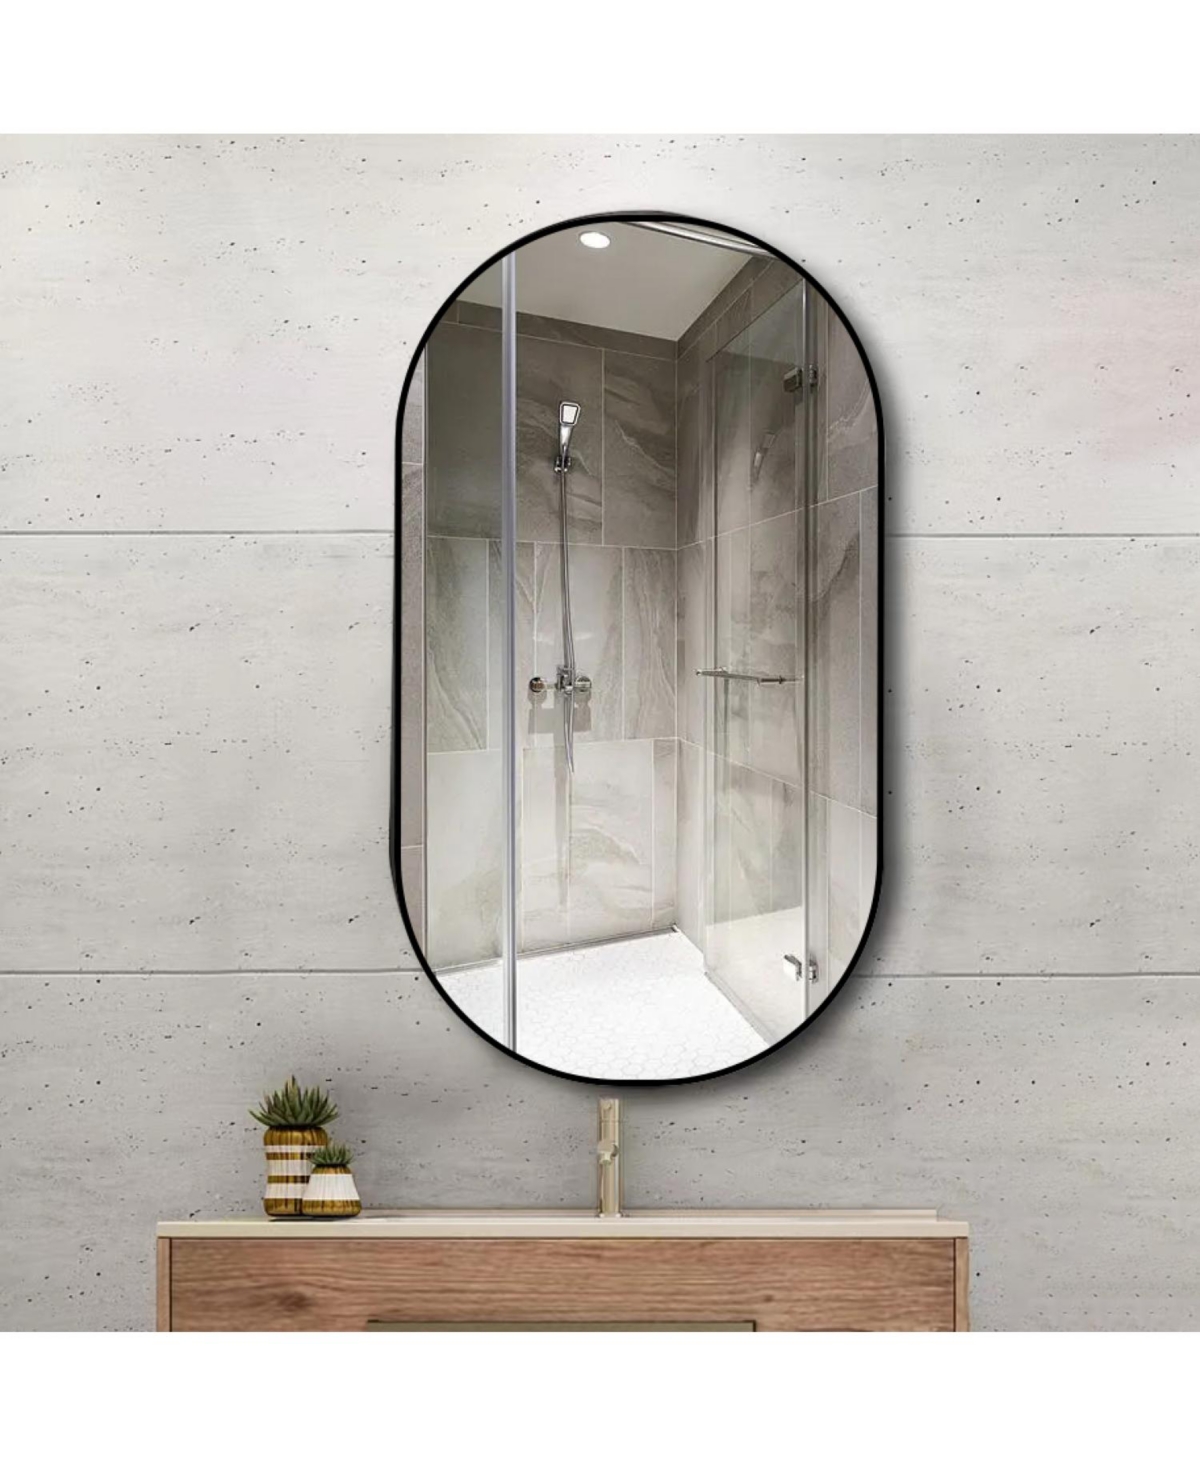 Simplie Fun Wall Mounted Mirror, 36''x 18'' Oval Bathroom Mirror, Black Vanity Wall Mirror W/ Stainless Steel Me